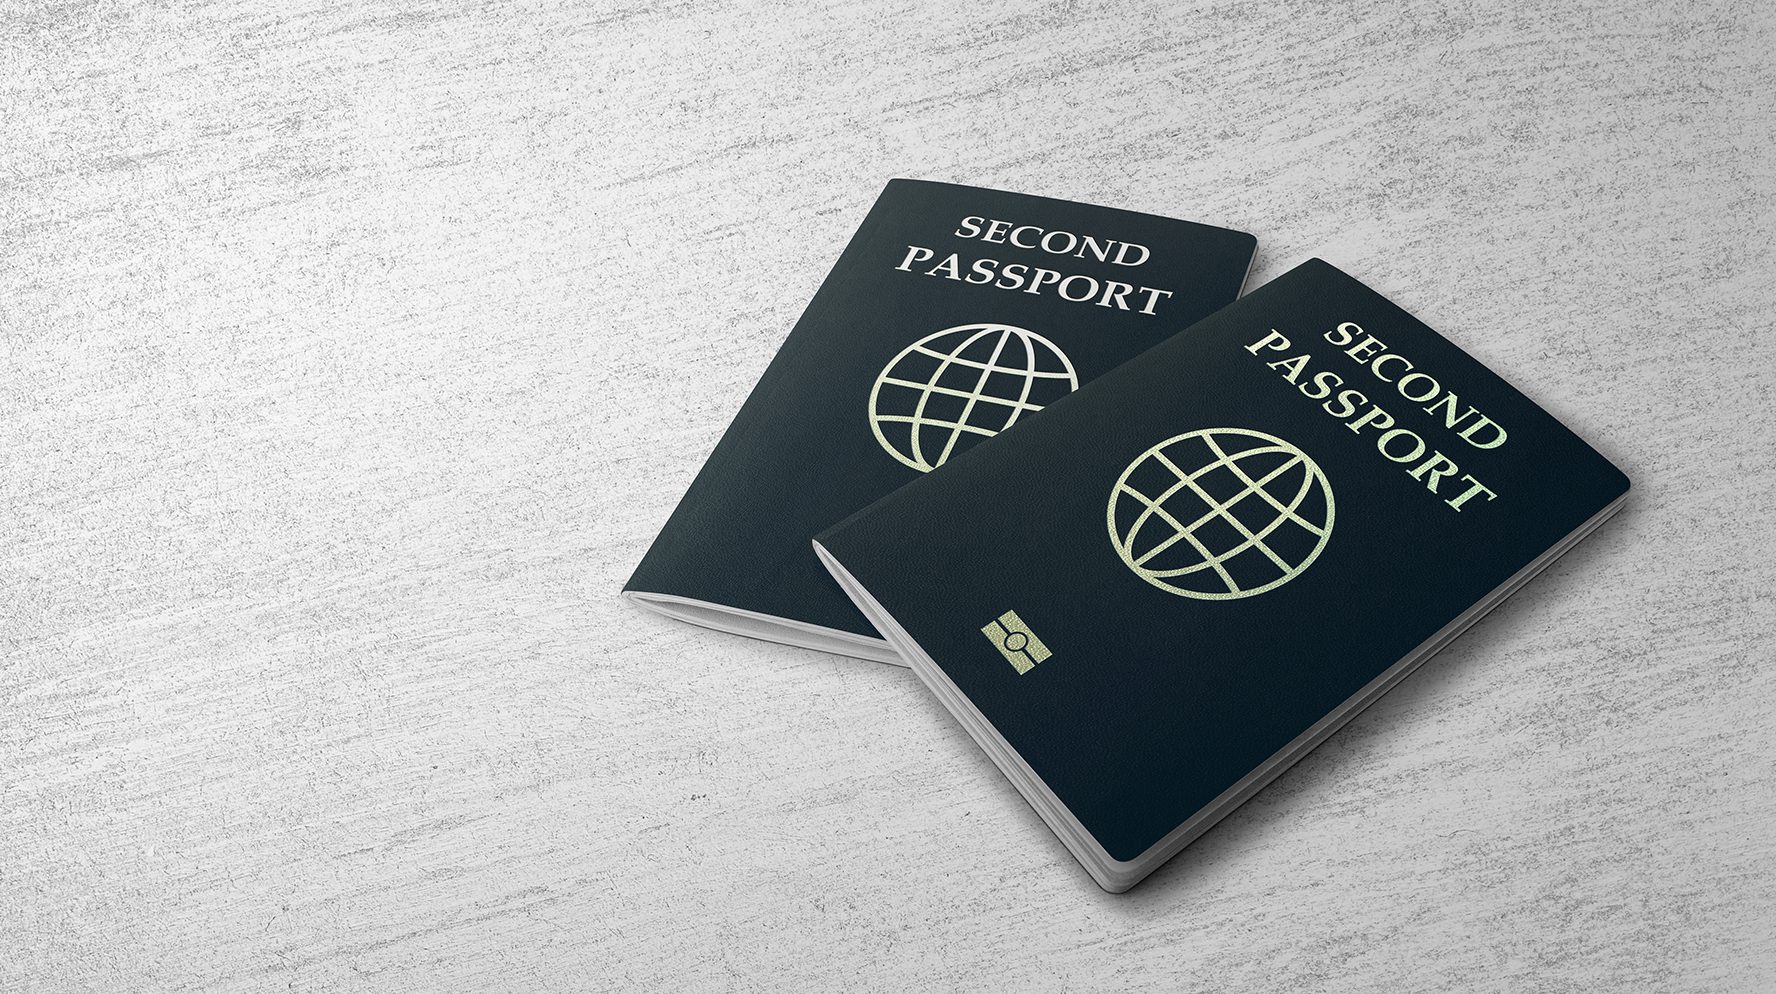 Rise of Second Passport